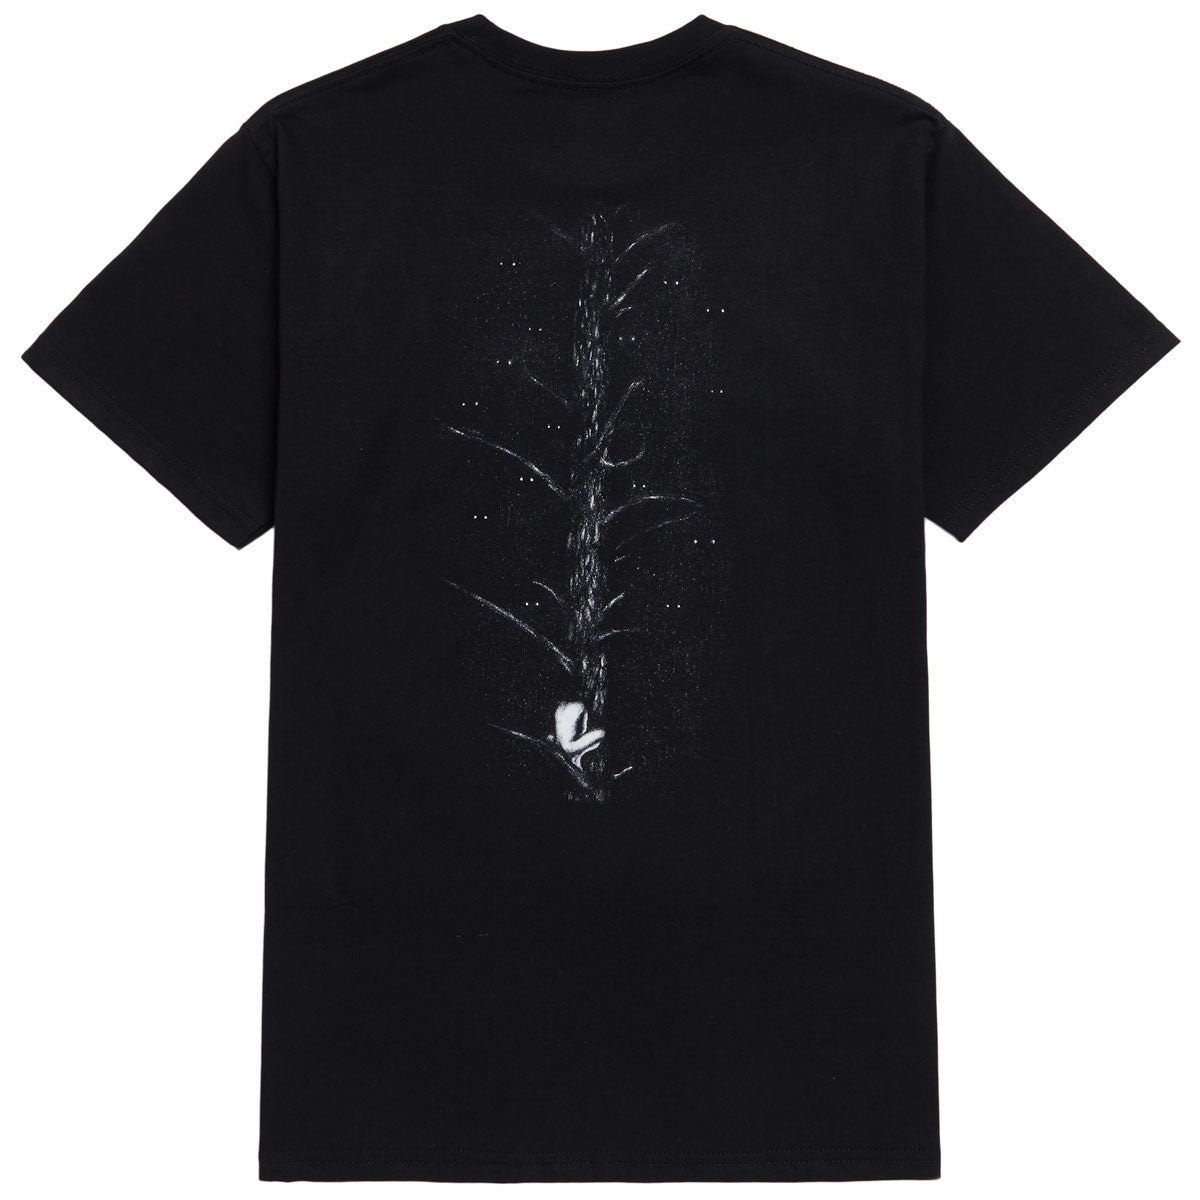 CCS Fear of the Dark T-Shirt - Black image 1